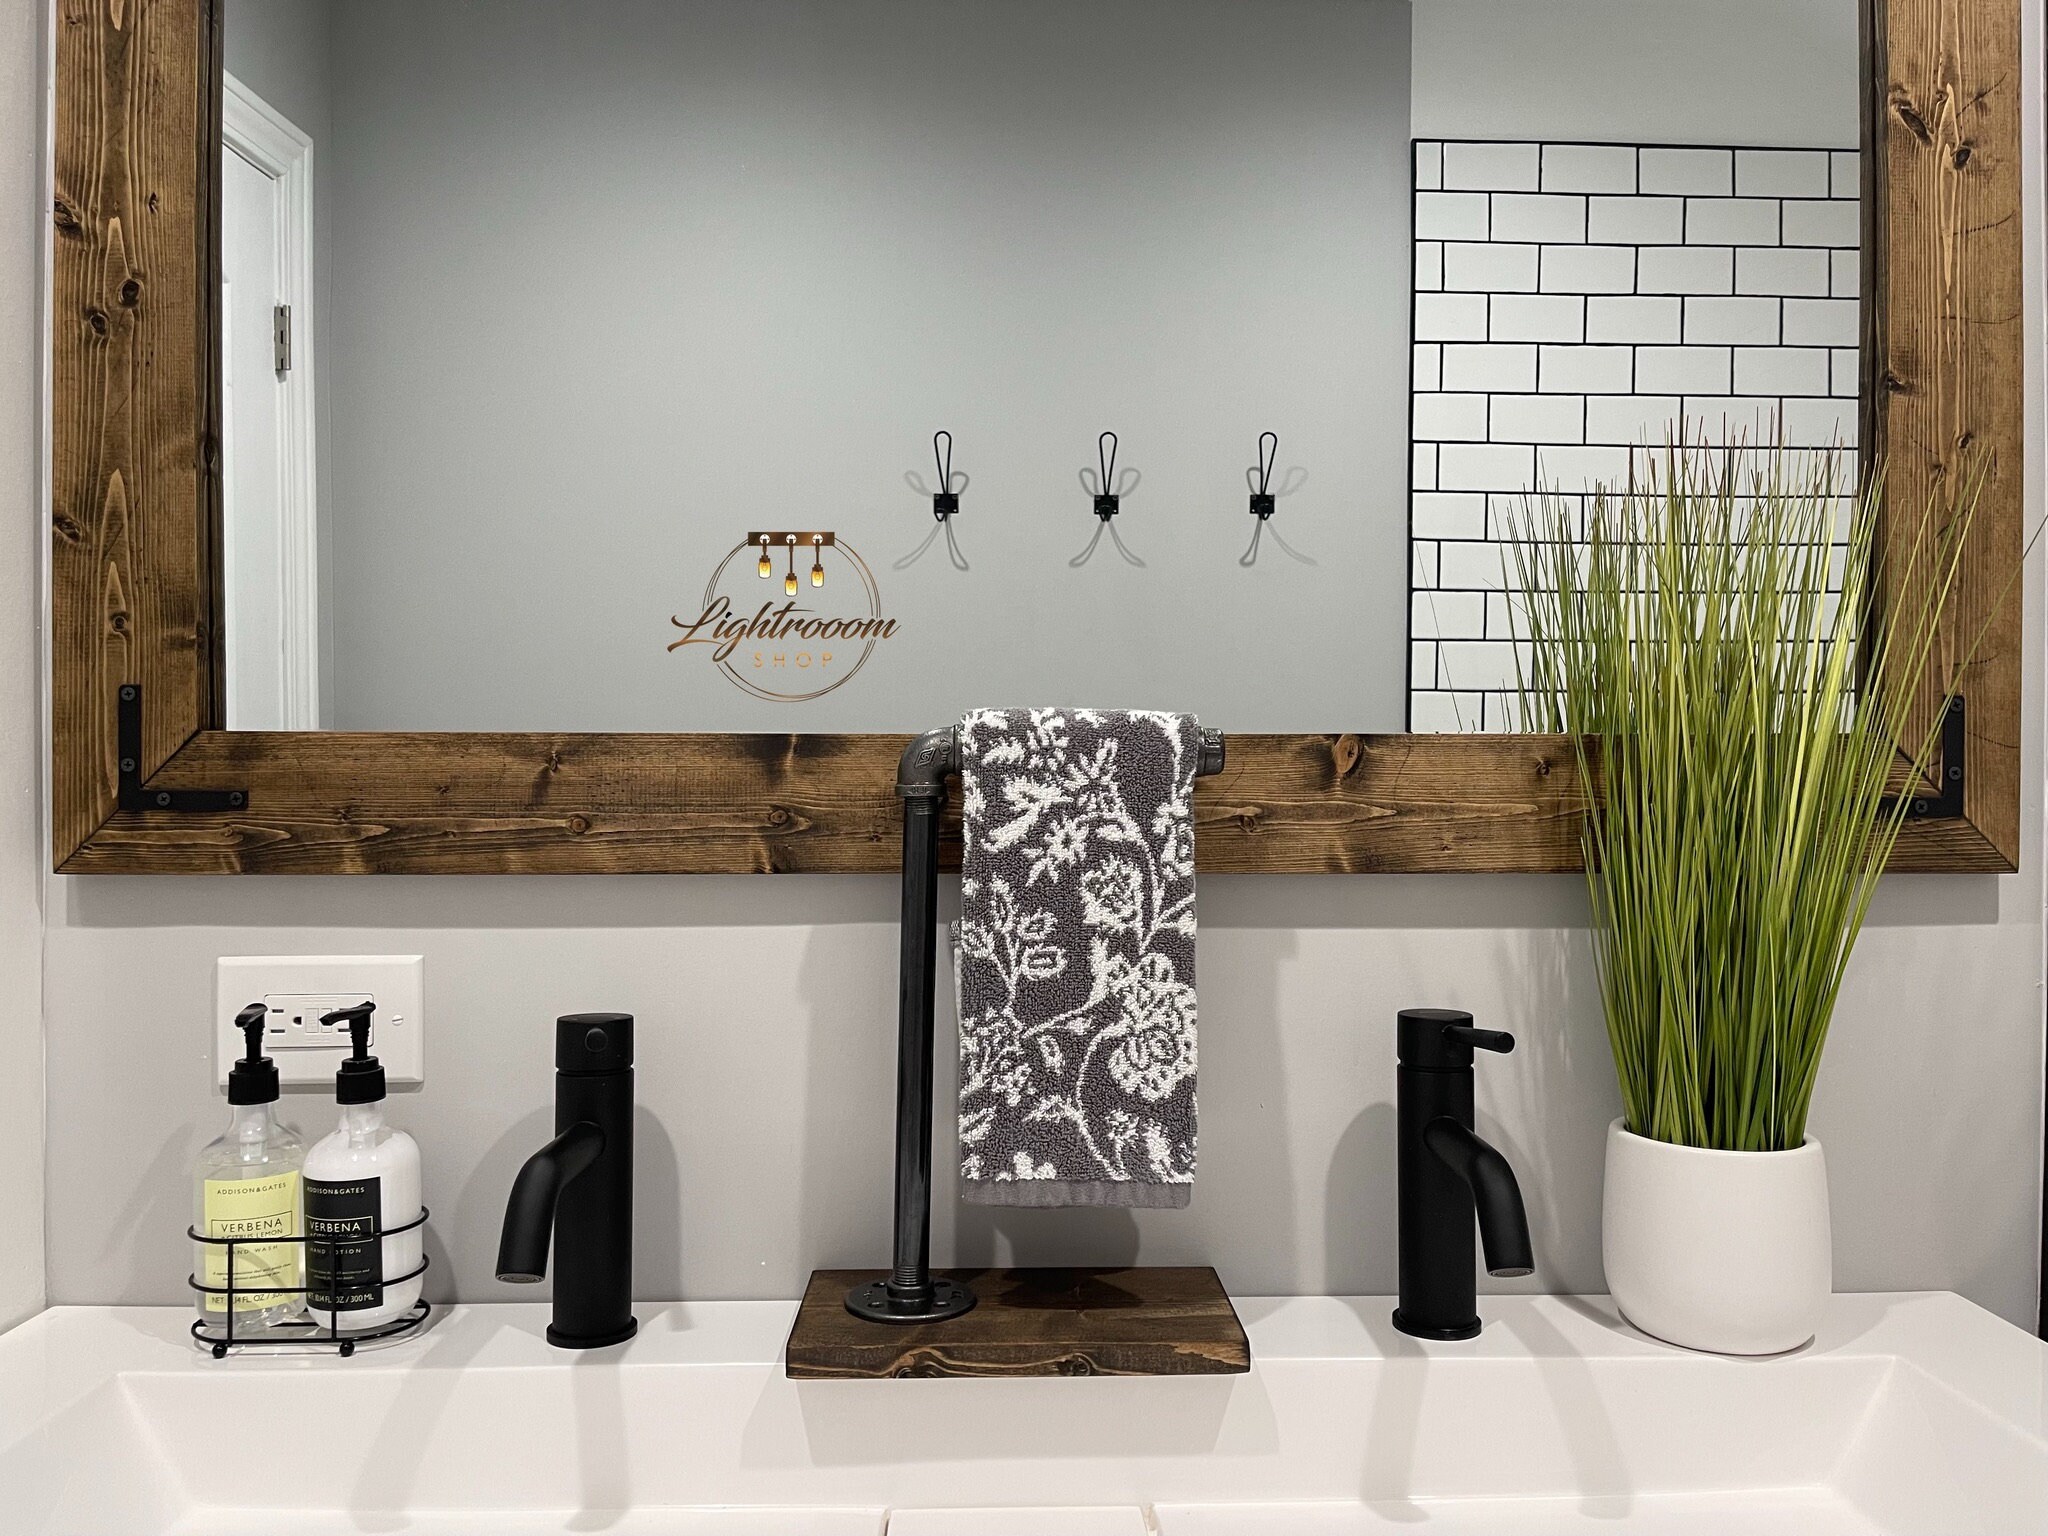 Hand Towels - Farmhouse Bathroom Décor – Rustic Country Bathroom Accessory  – Set of 2